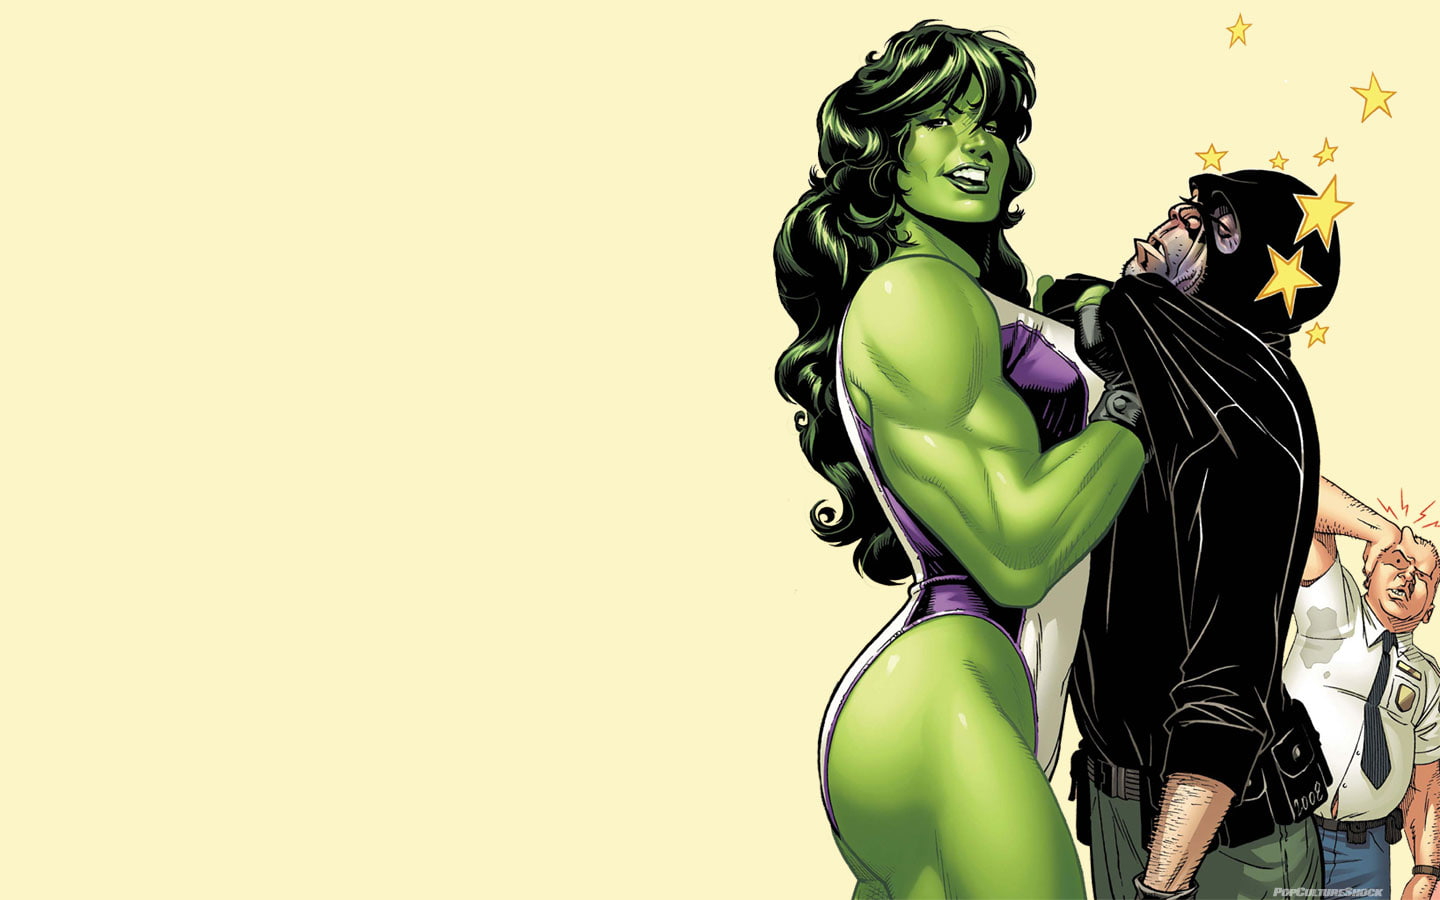 Wallpaper Comics, She Hulk 1440x900px 720p, She Hulk, Movies